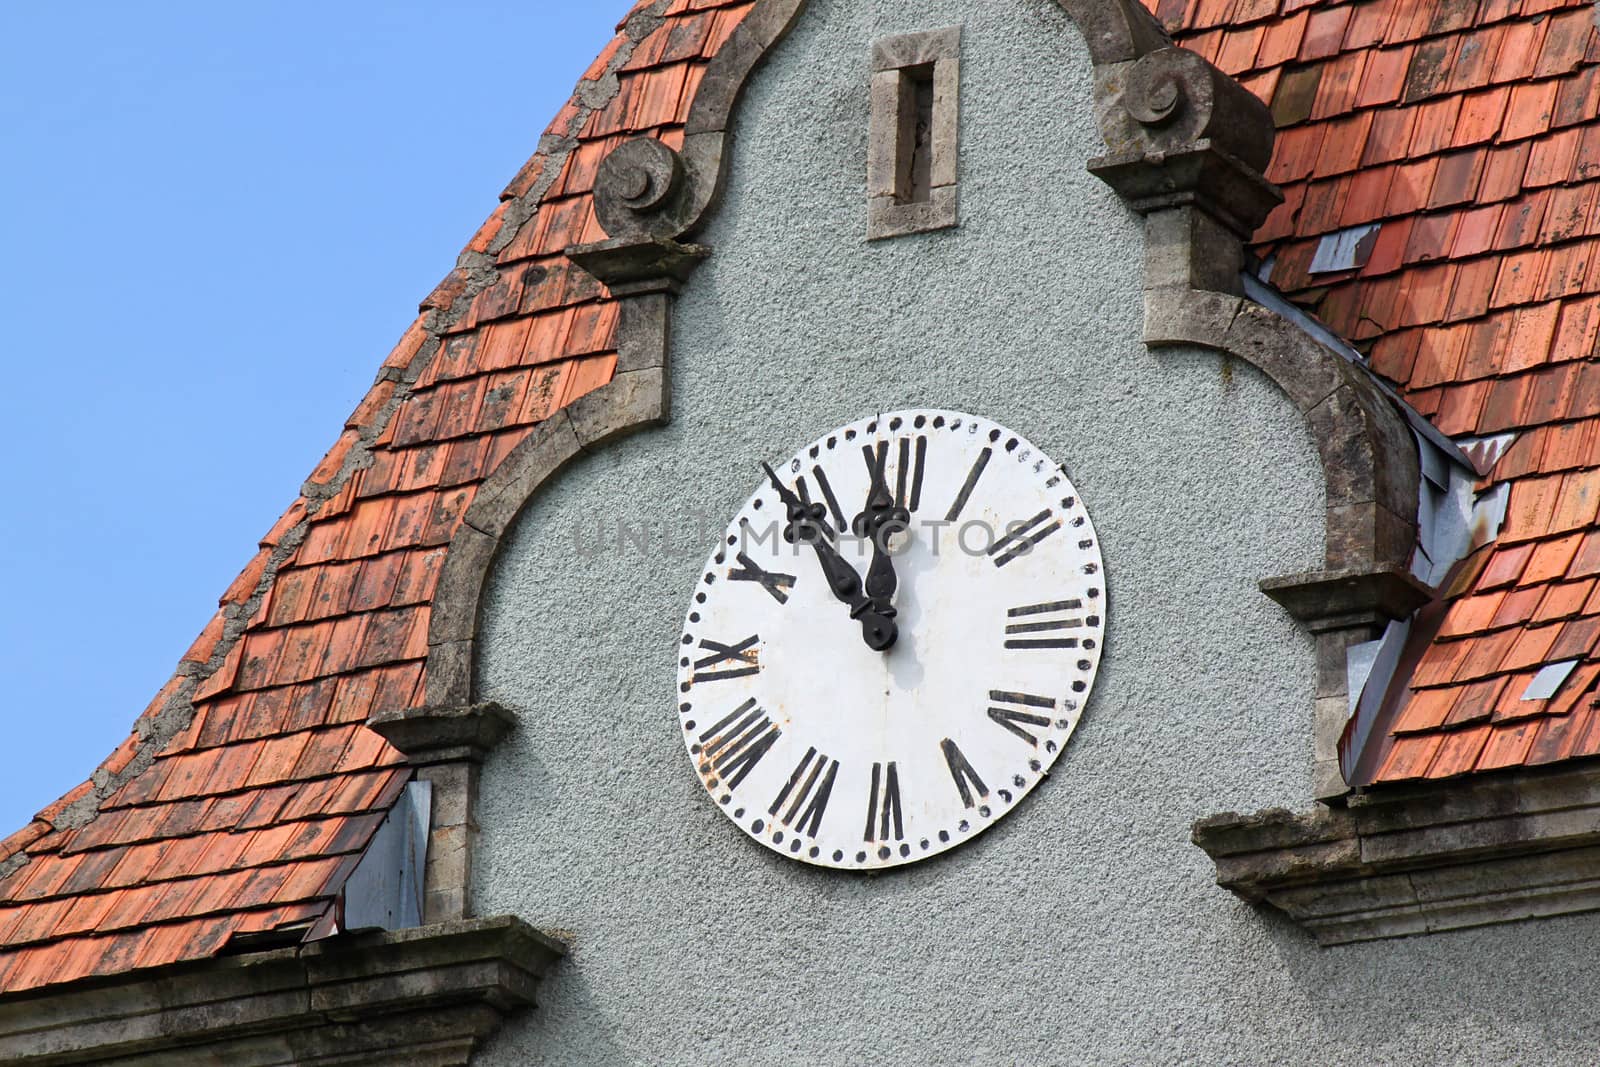 clock on tower of palace near Chynadiyovo, Ukraine